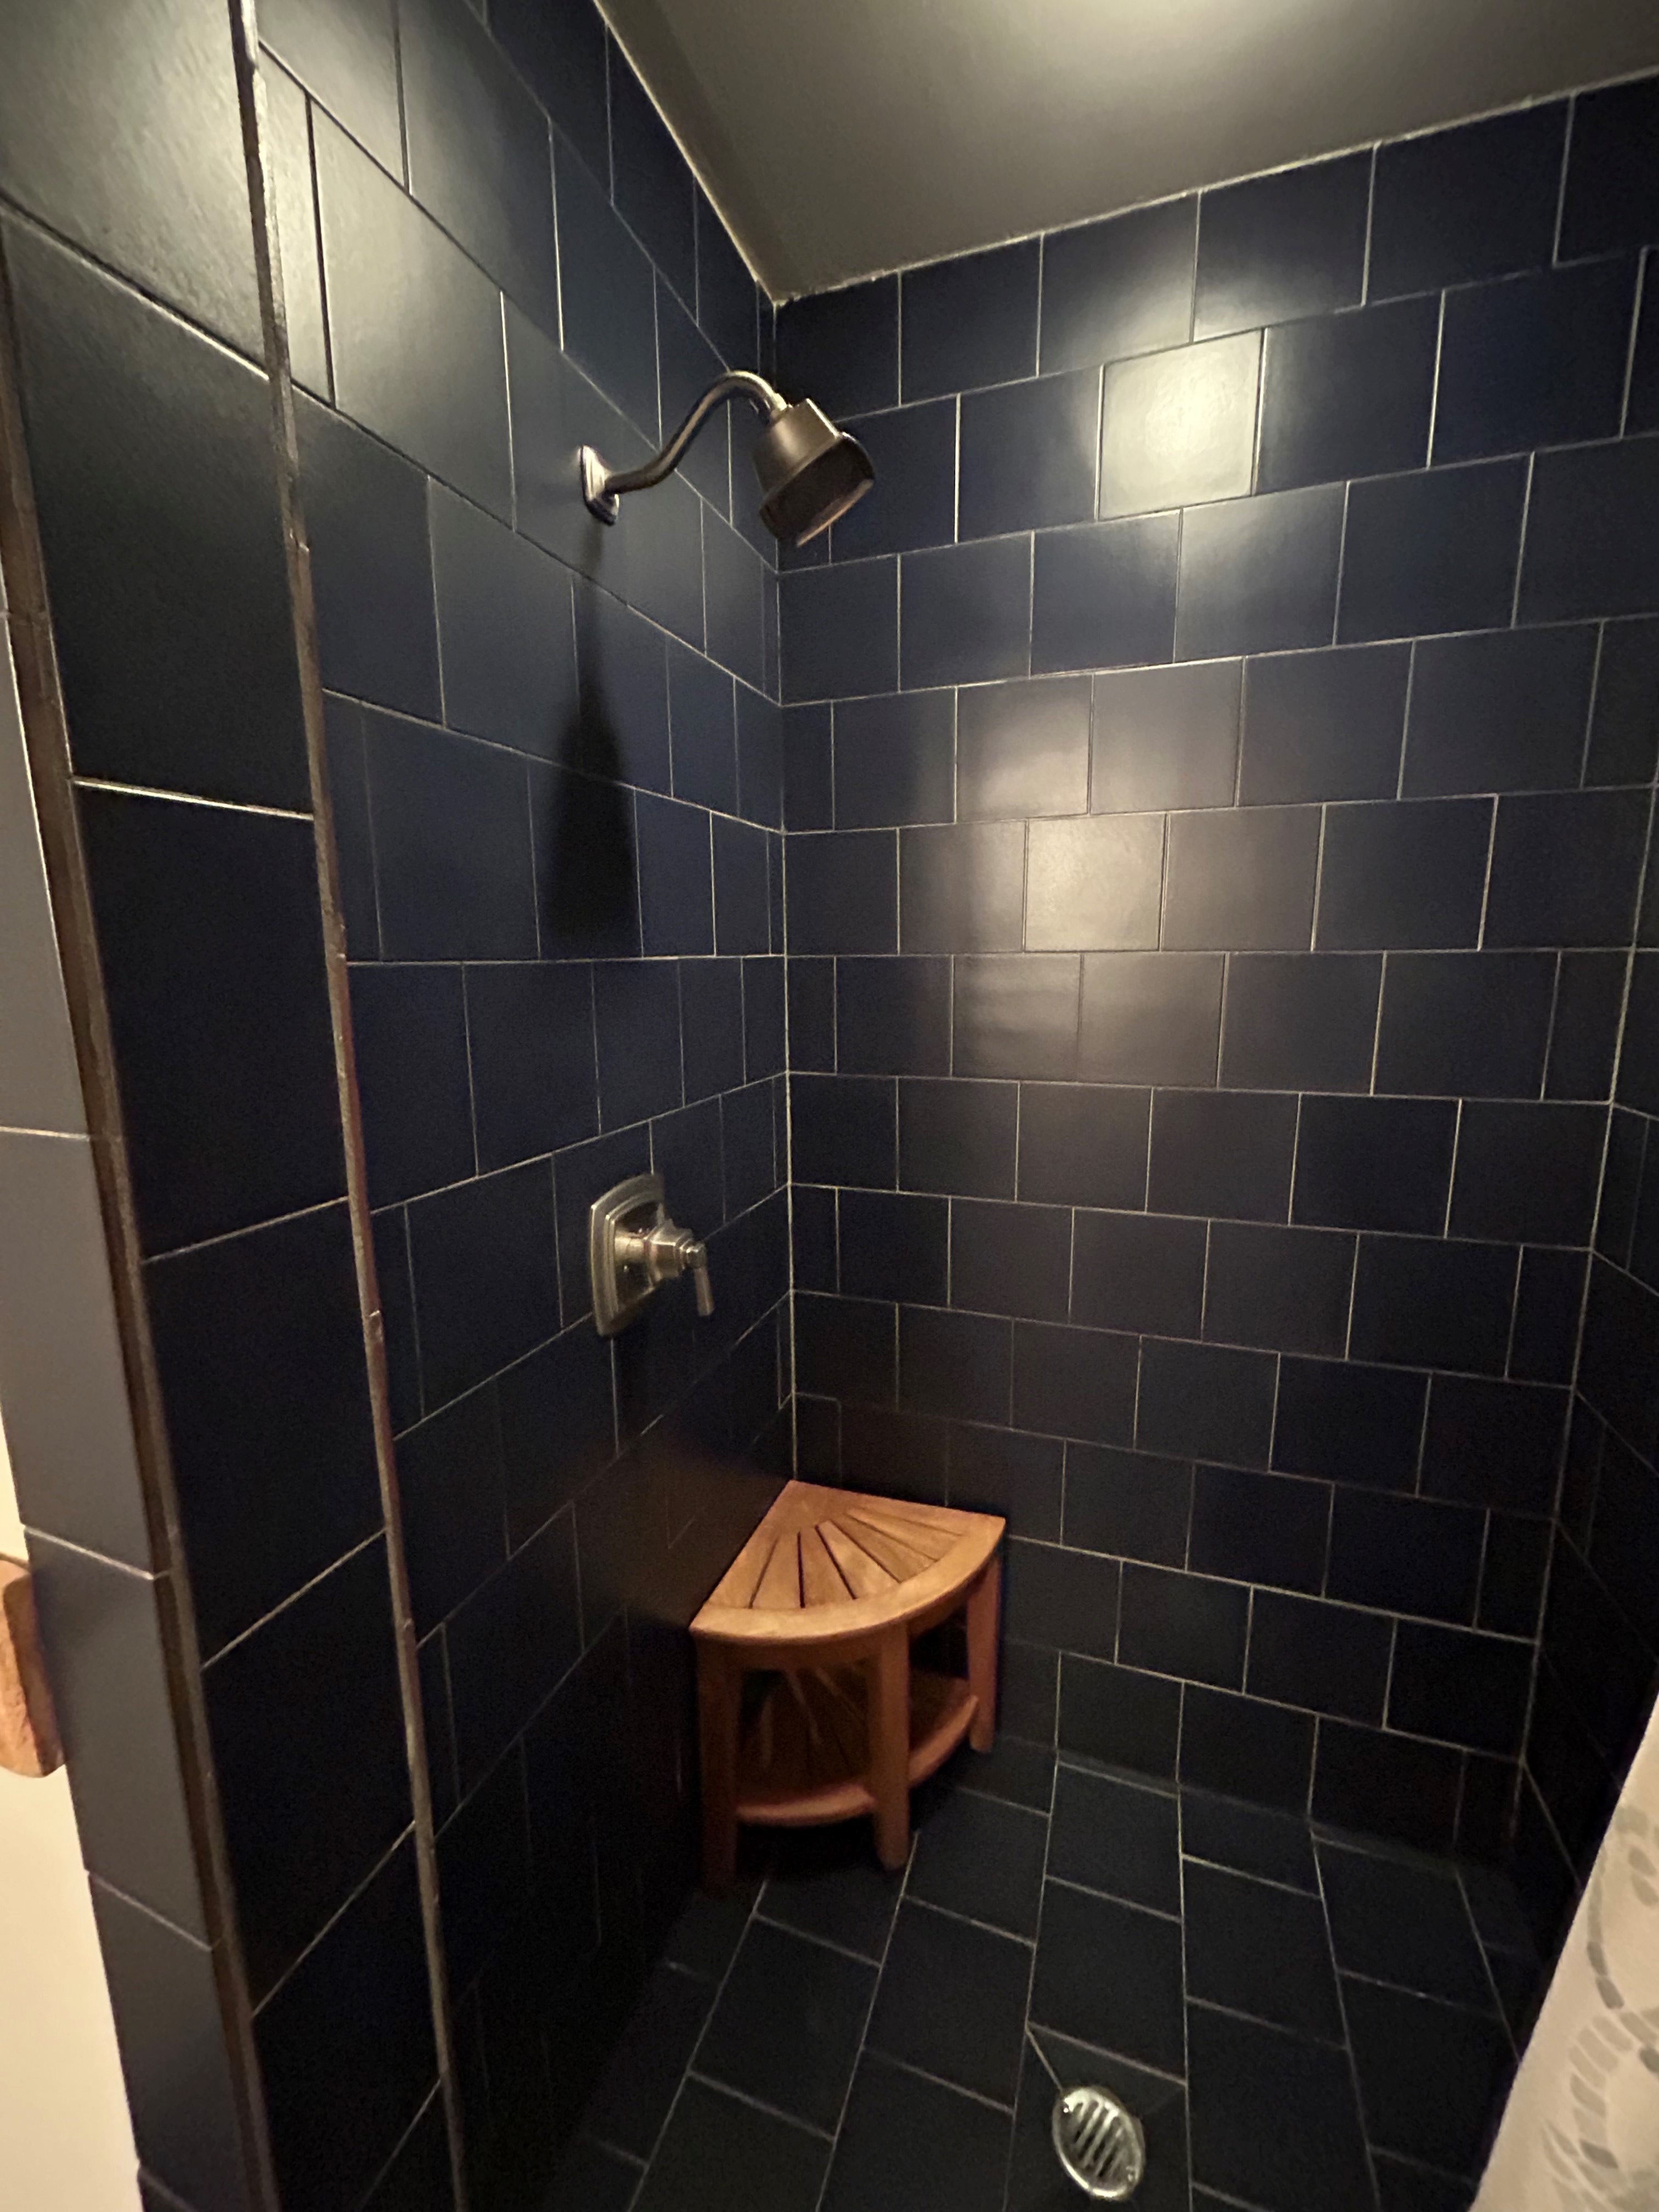 Full bath off Hallway Tiled Shower adn Washer Dryer